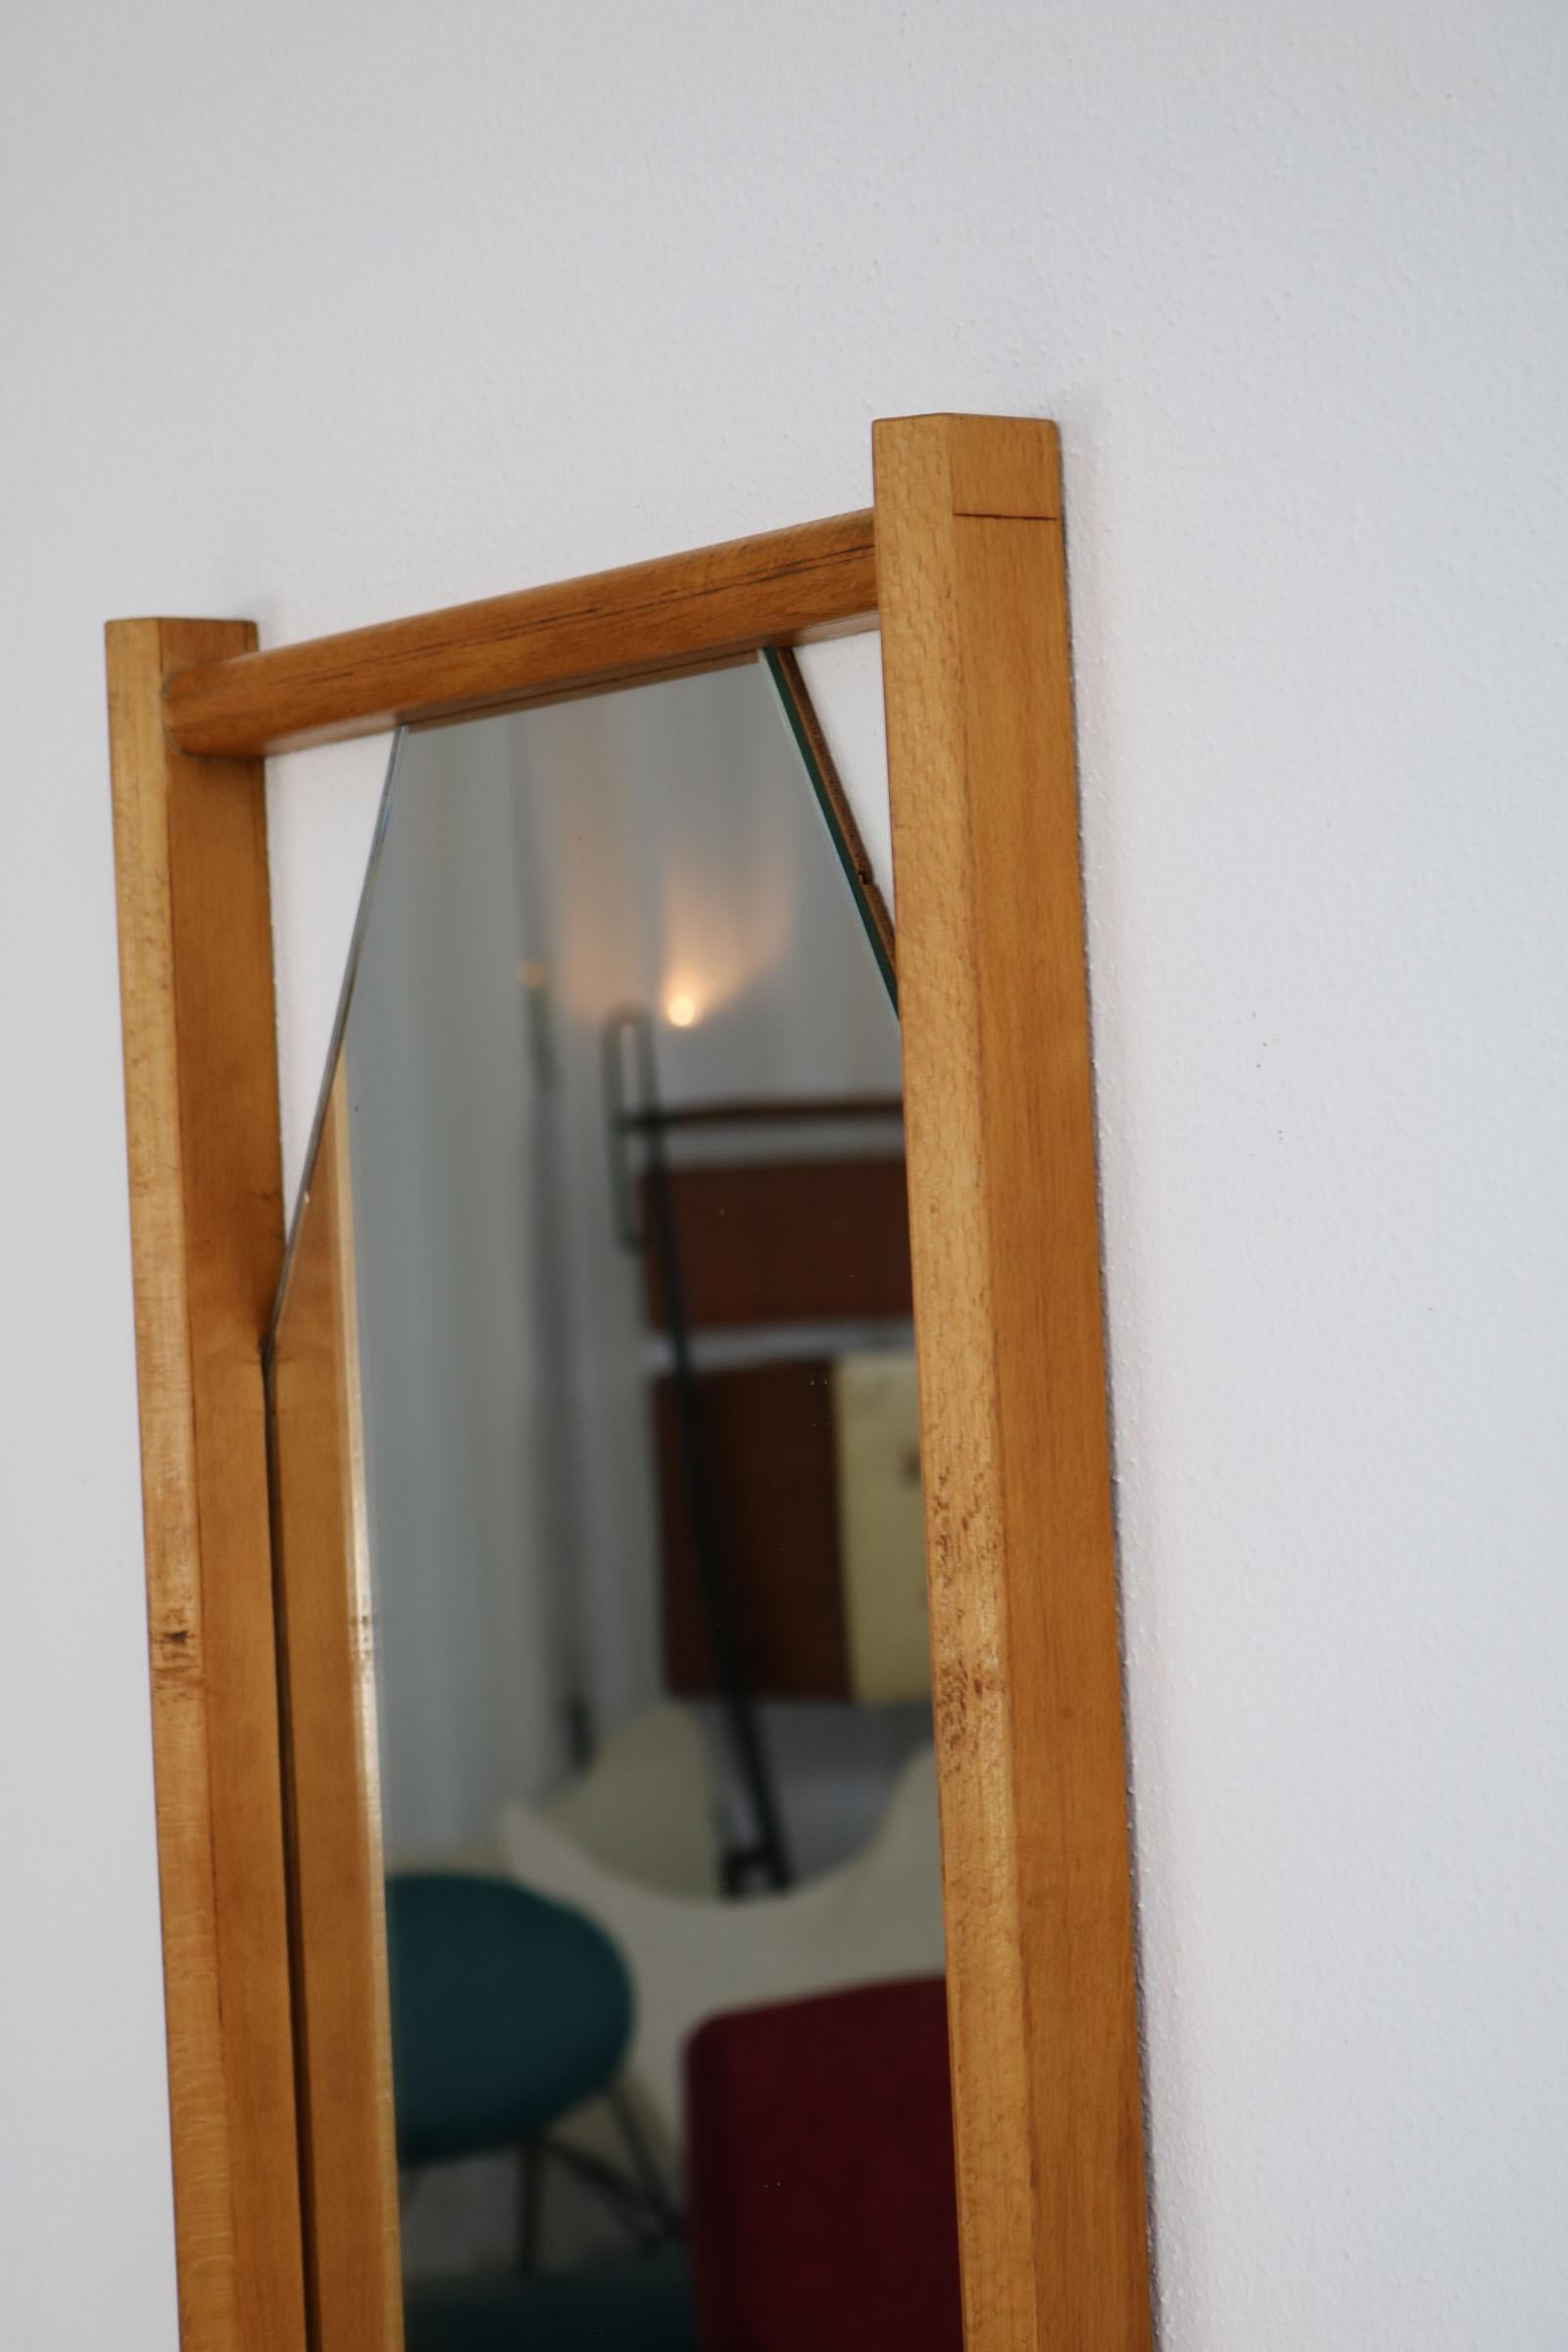 Beechwood Framed, Hexogan Shaped Italian Wall Mirror with Shelf, 1960s For Sale 4